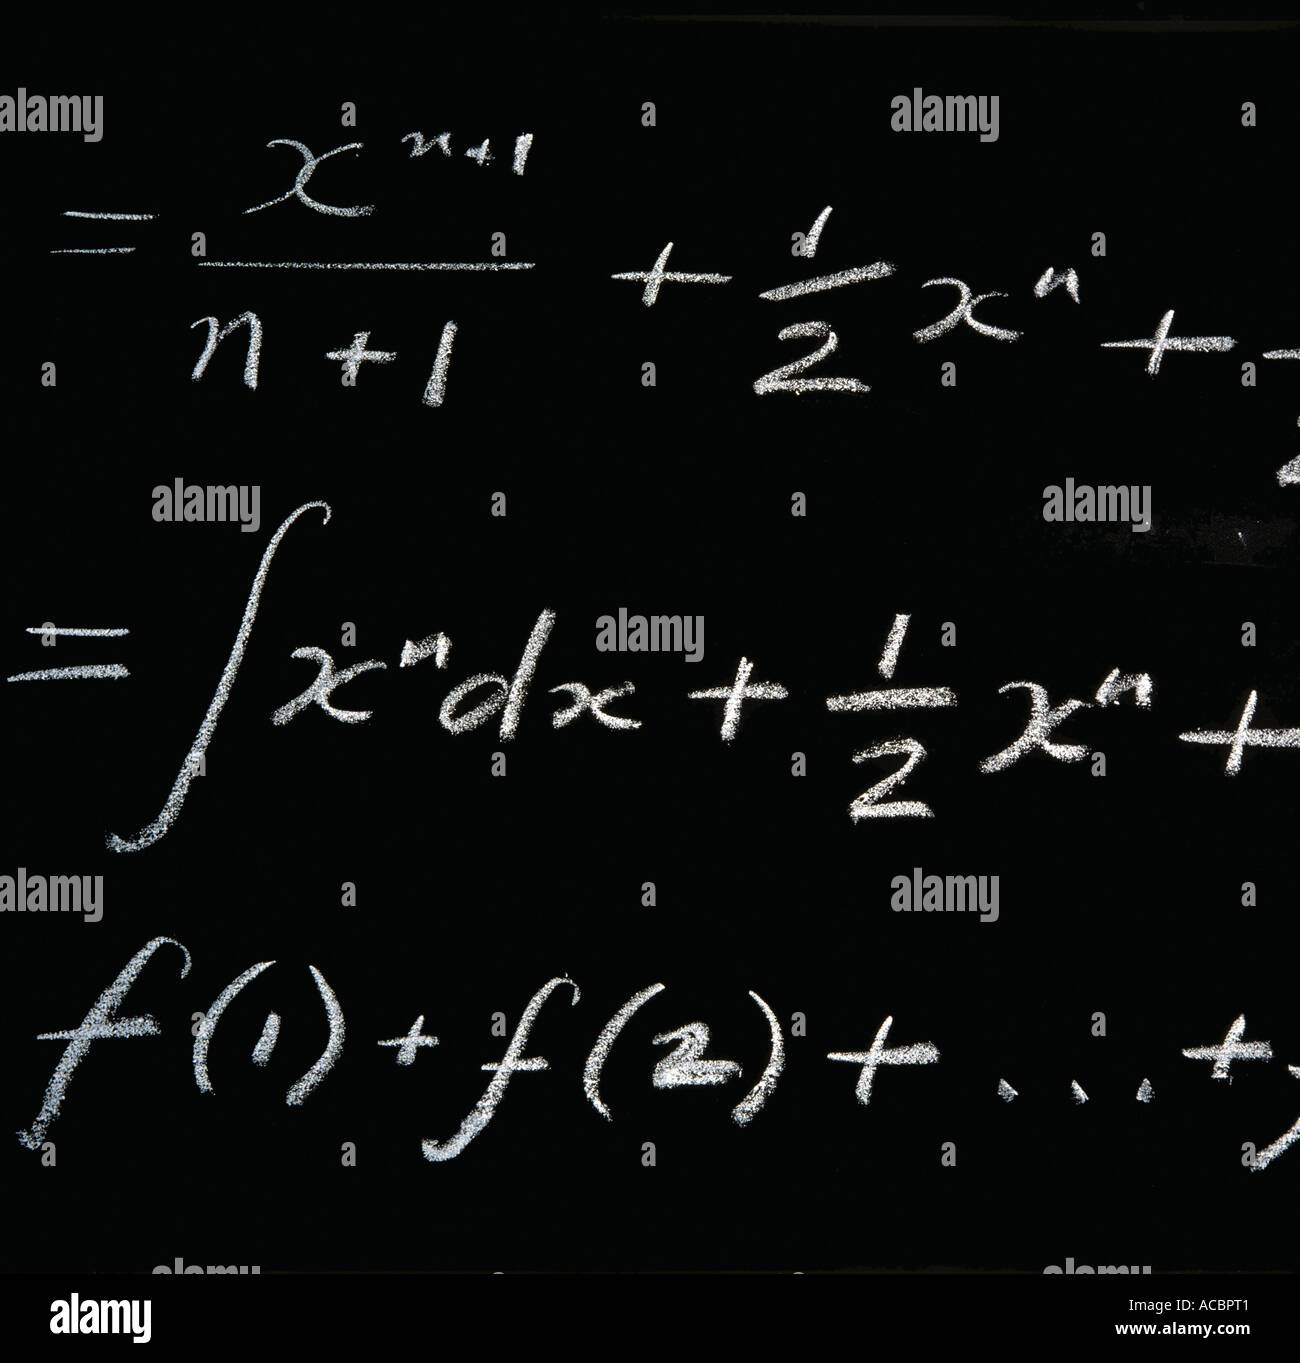 algebra on black board Stock Photo